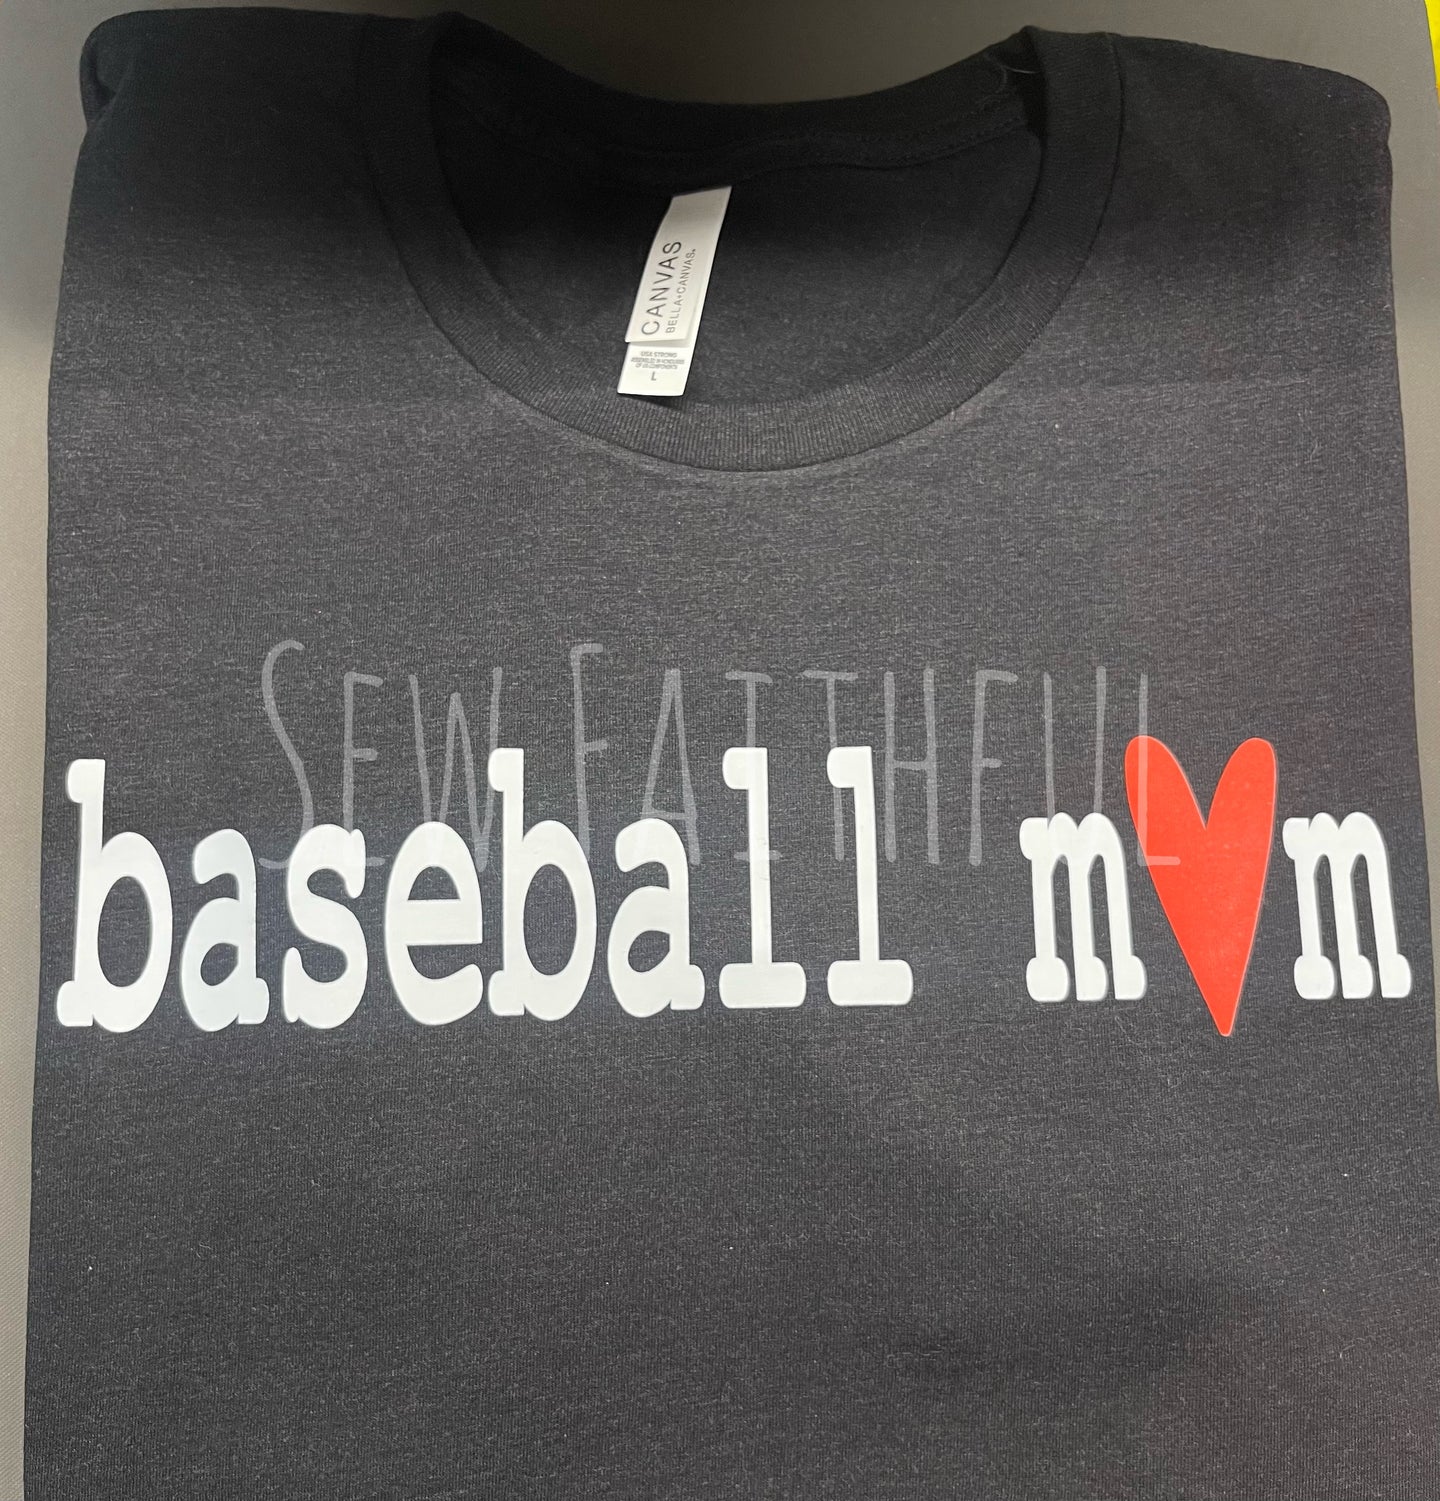 Baseball Mom Heart